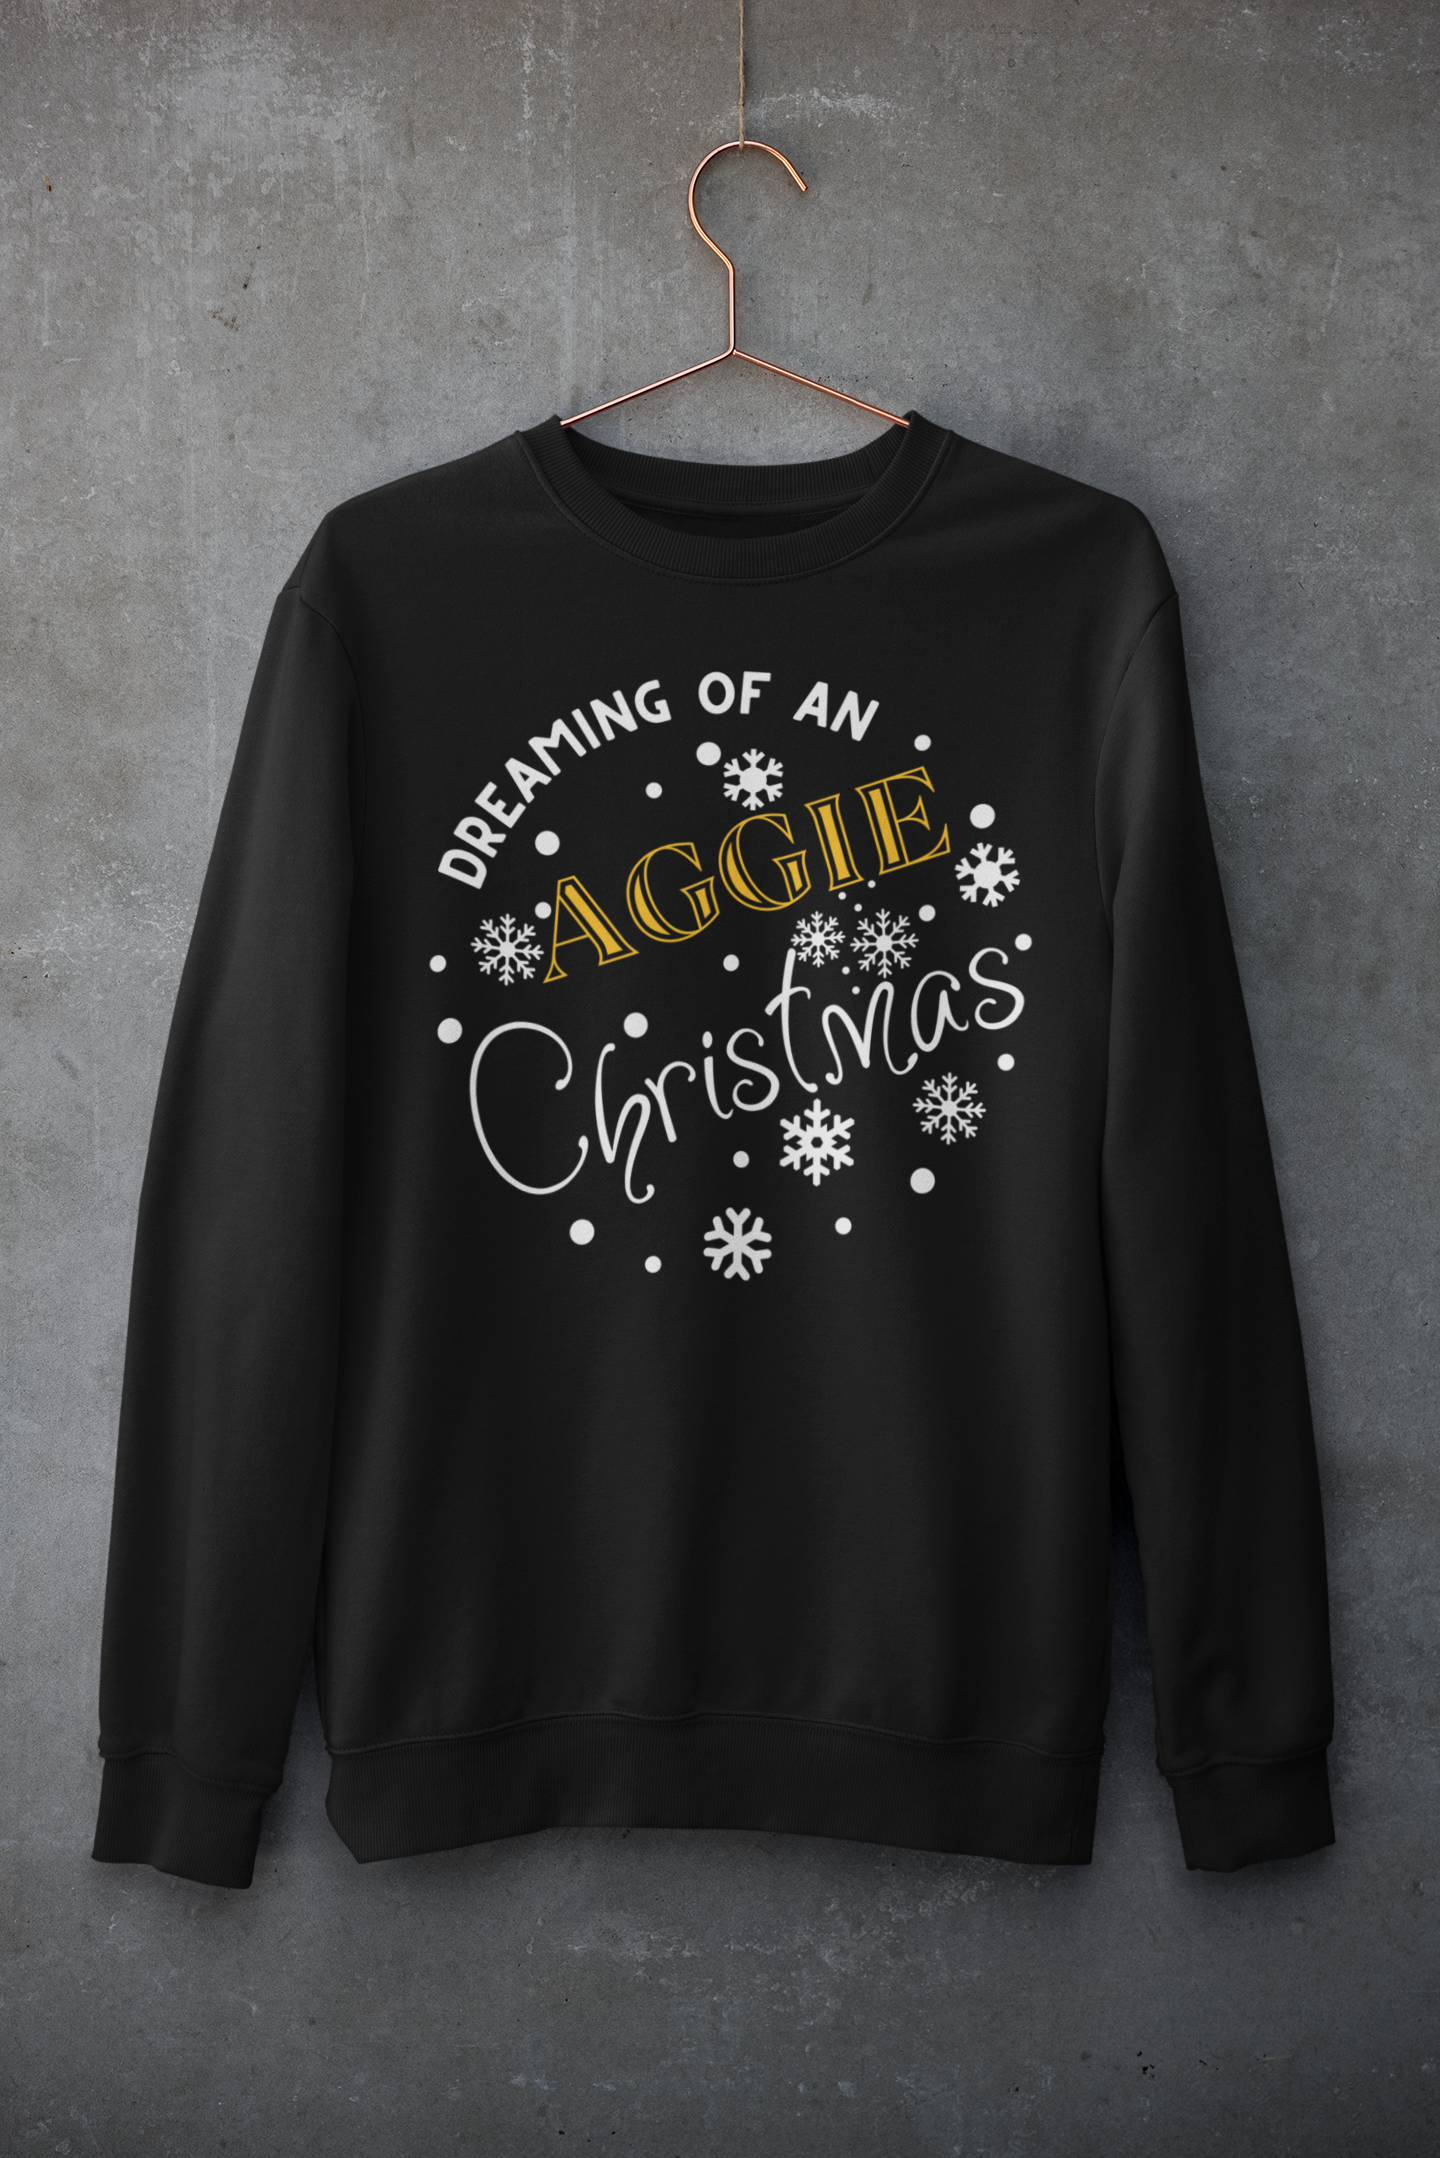 Aggie Christmas T-Shirt or Sweatshirt (Adult)